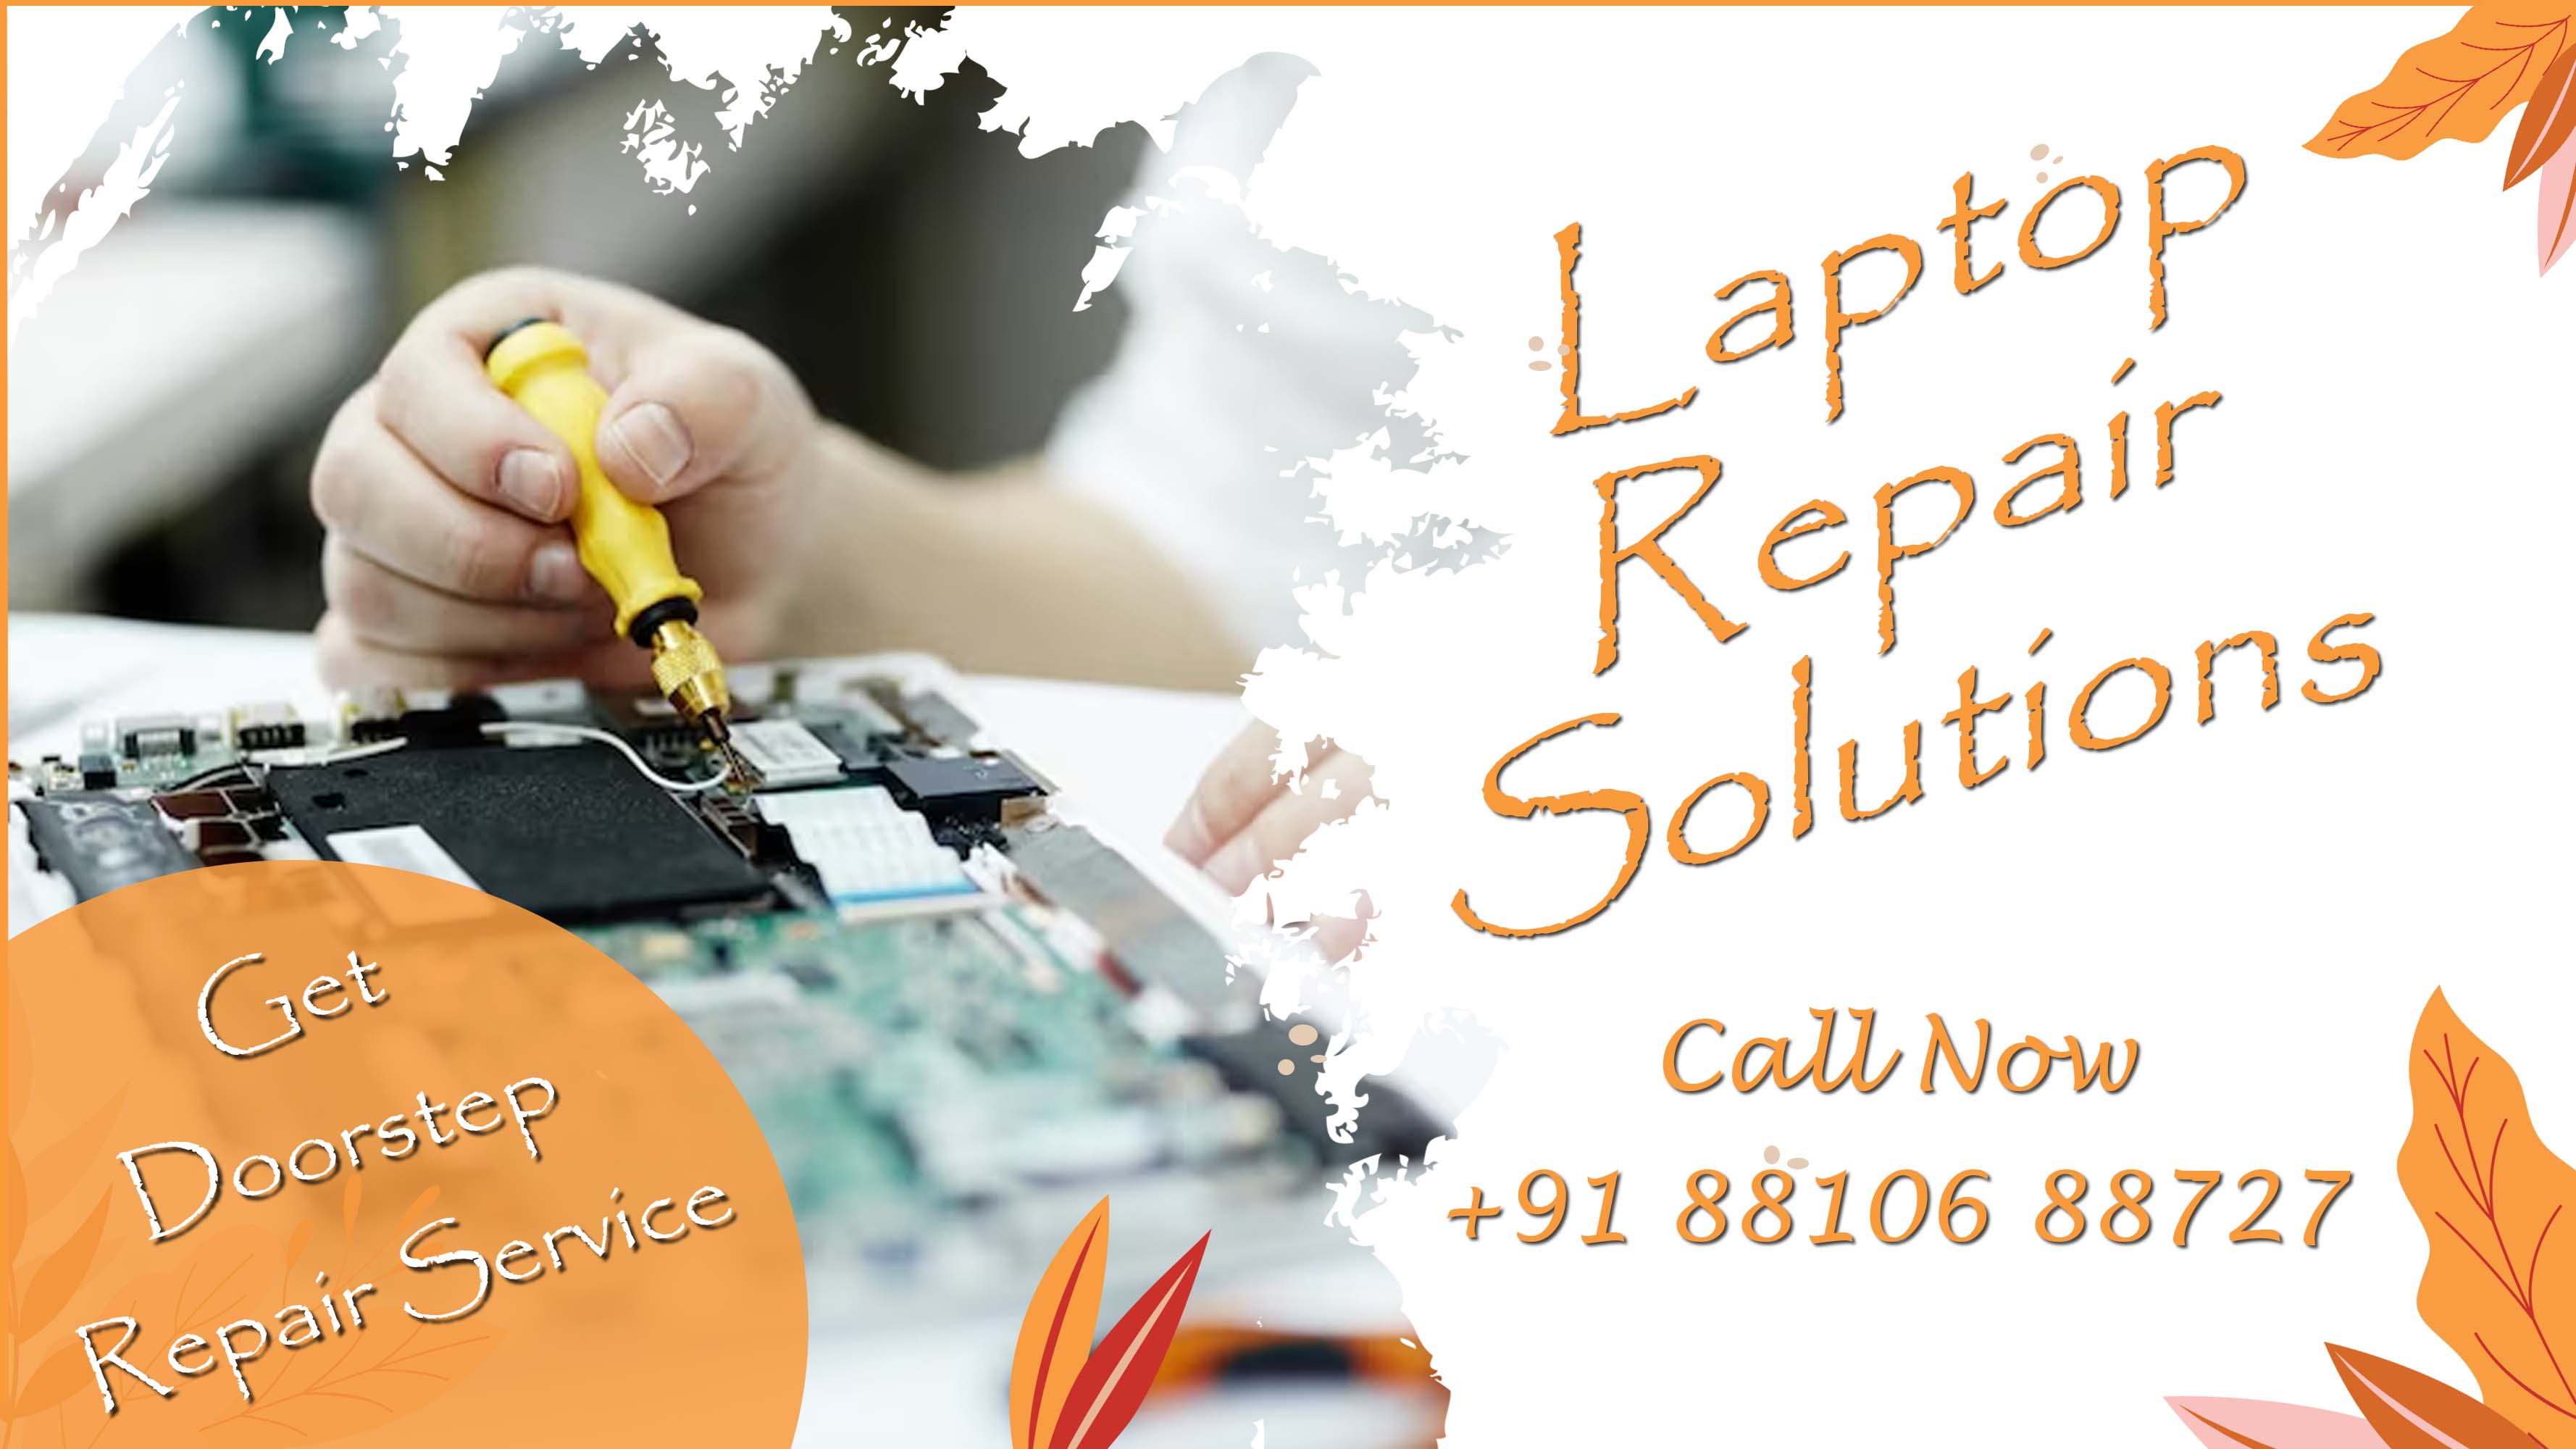 HP laptop service center in Gurgaon